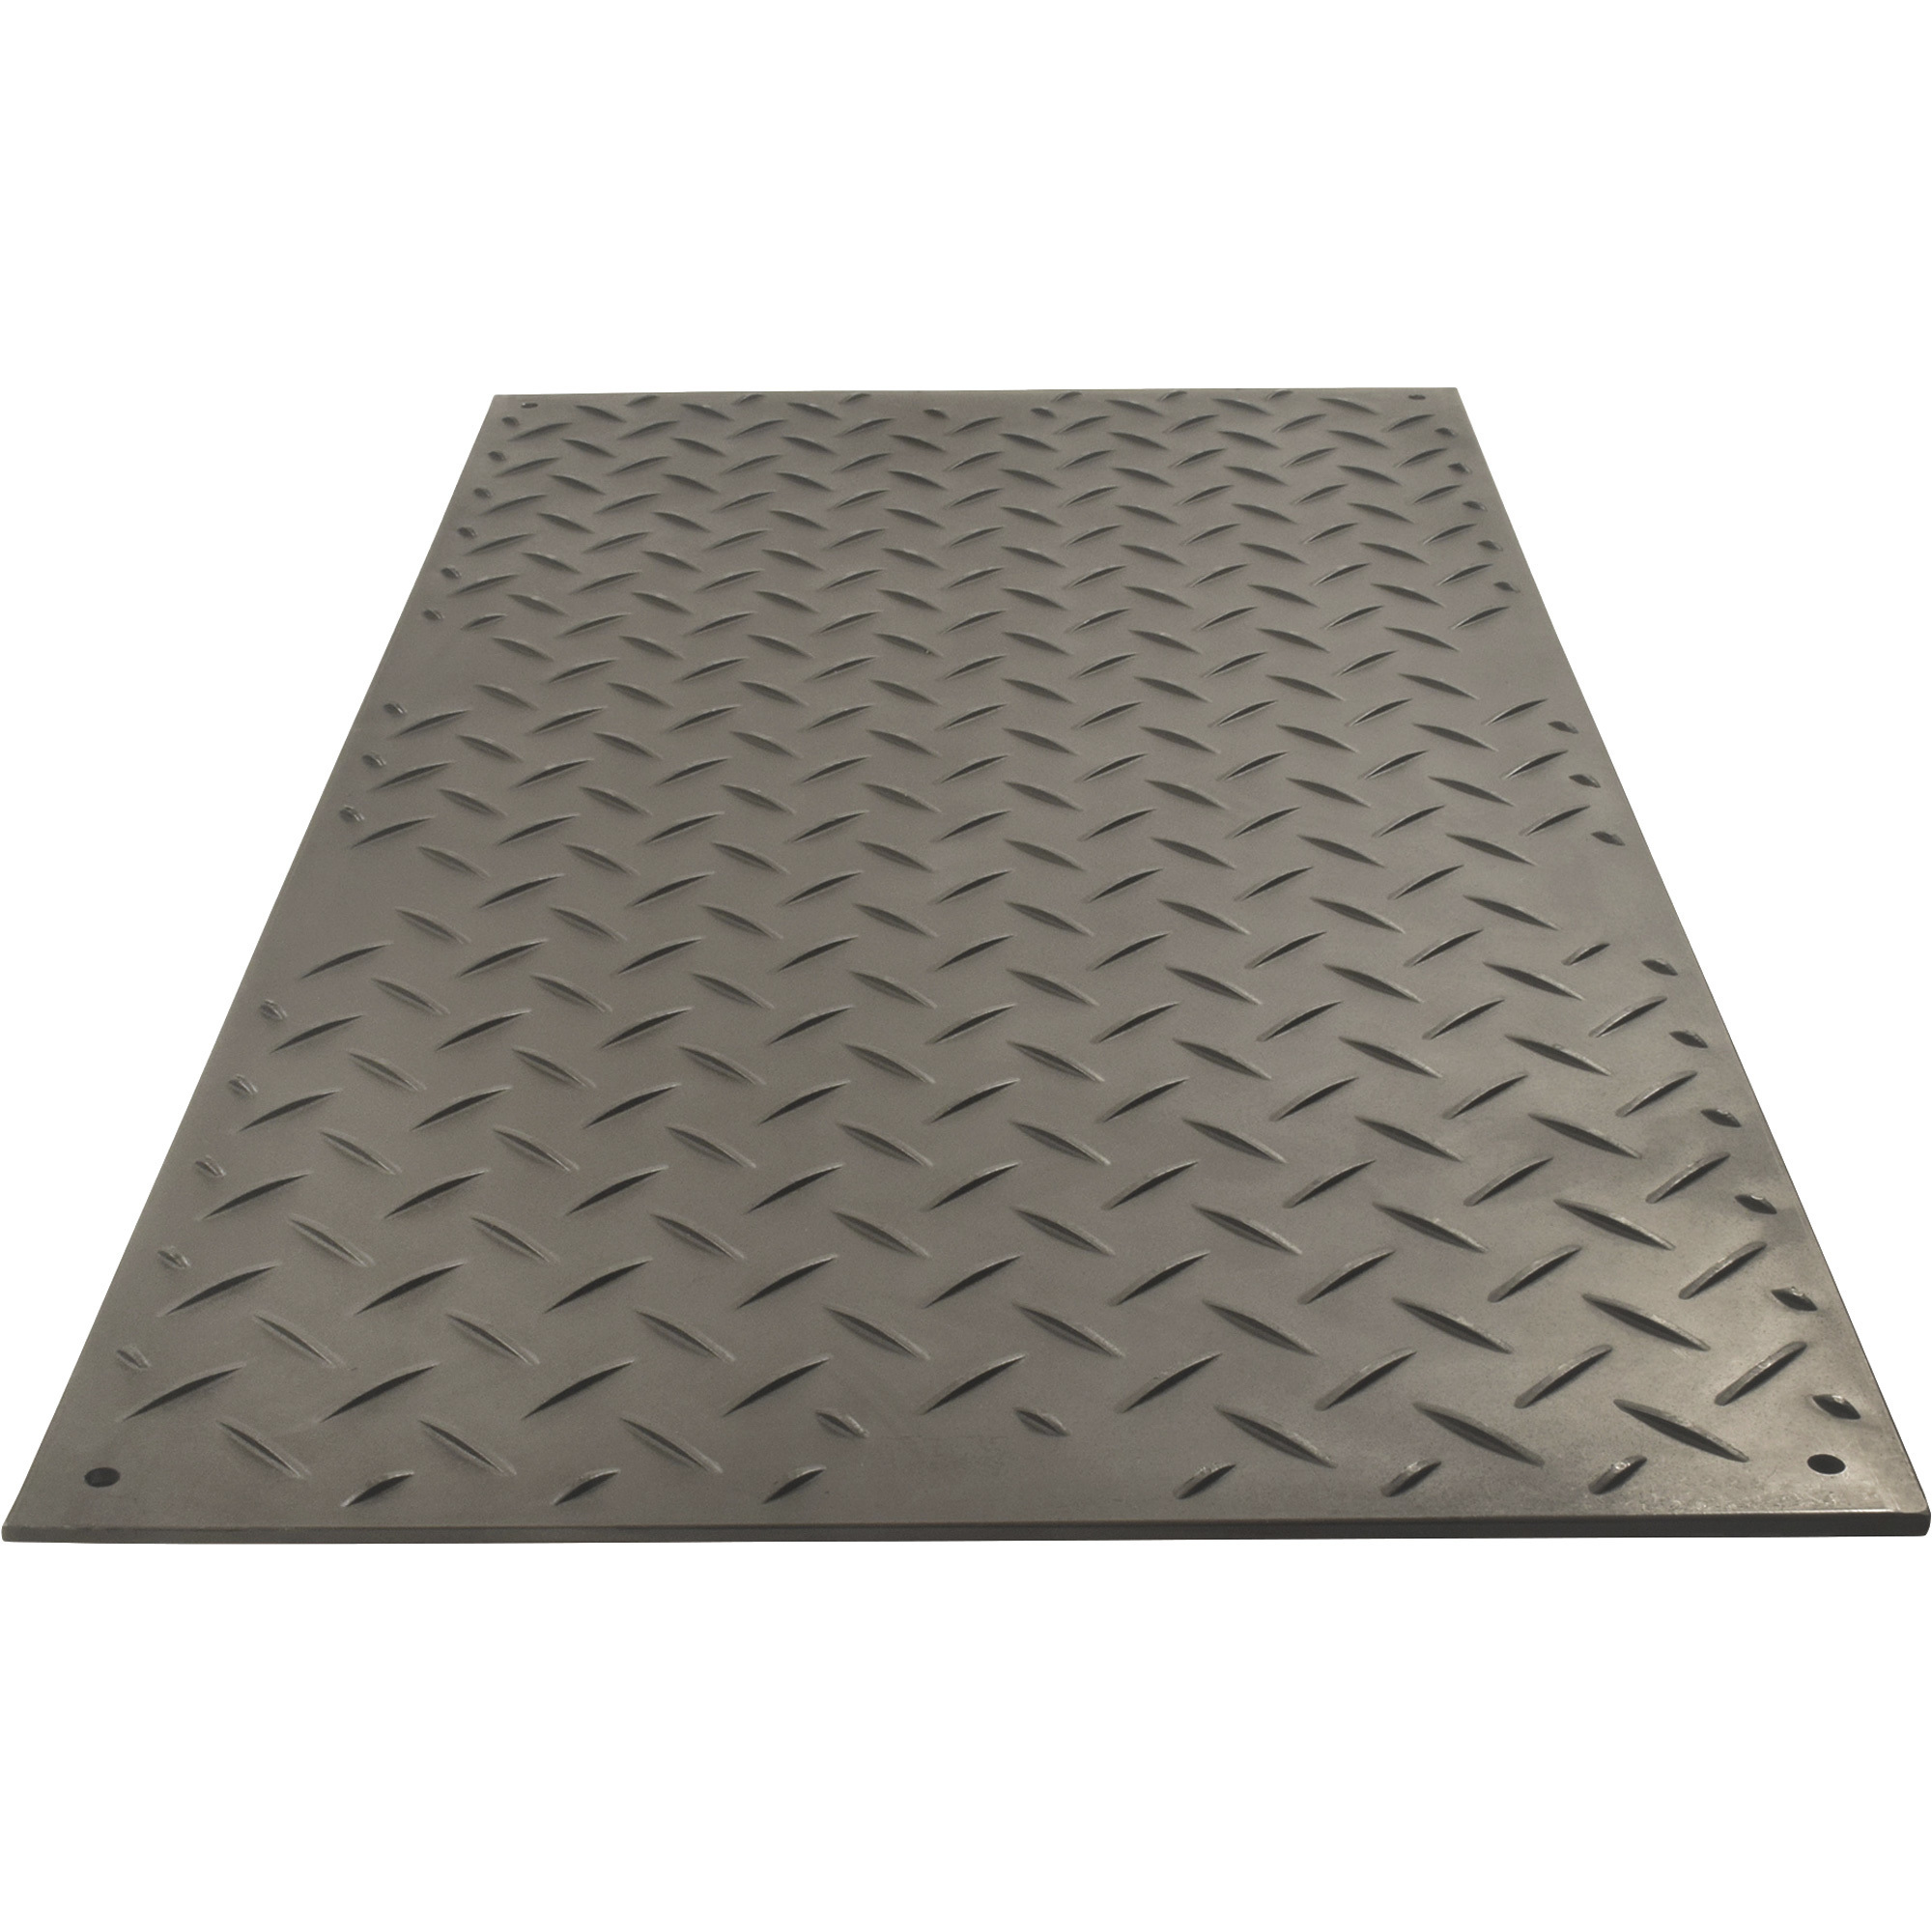 Checkers AlturnaMat Ground Protection Mat â Black, 4ft.W x 8ft.L, Diamond Plate Tread Design, Model AM48